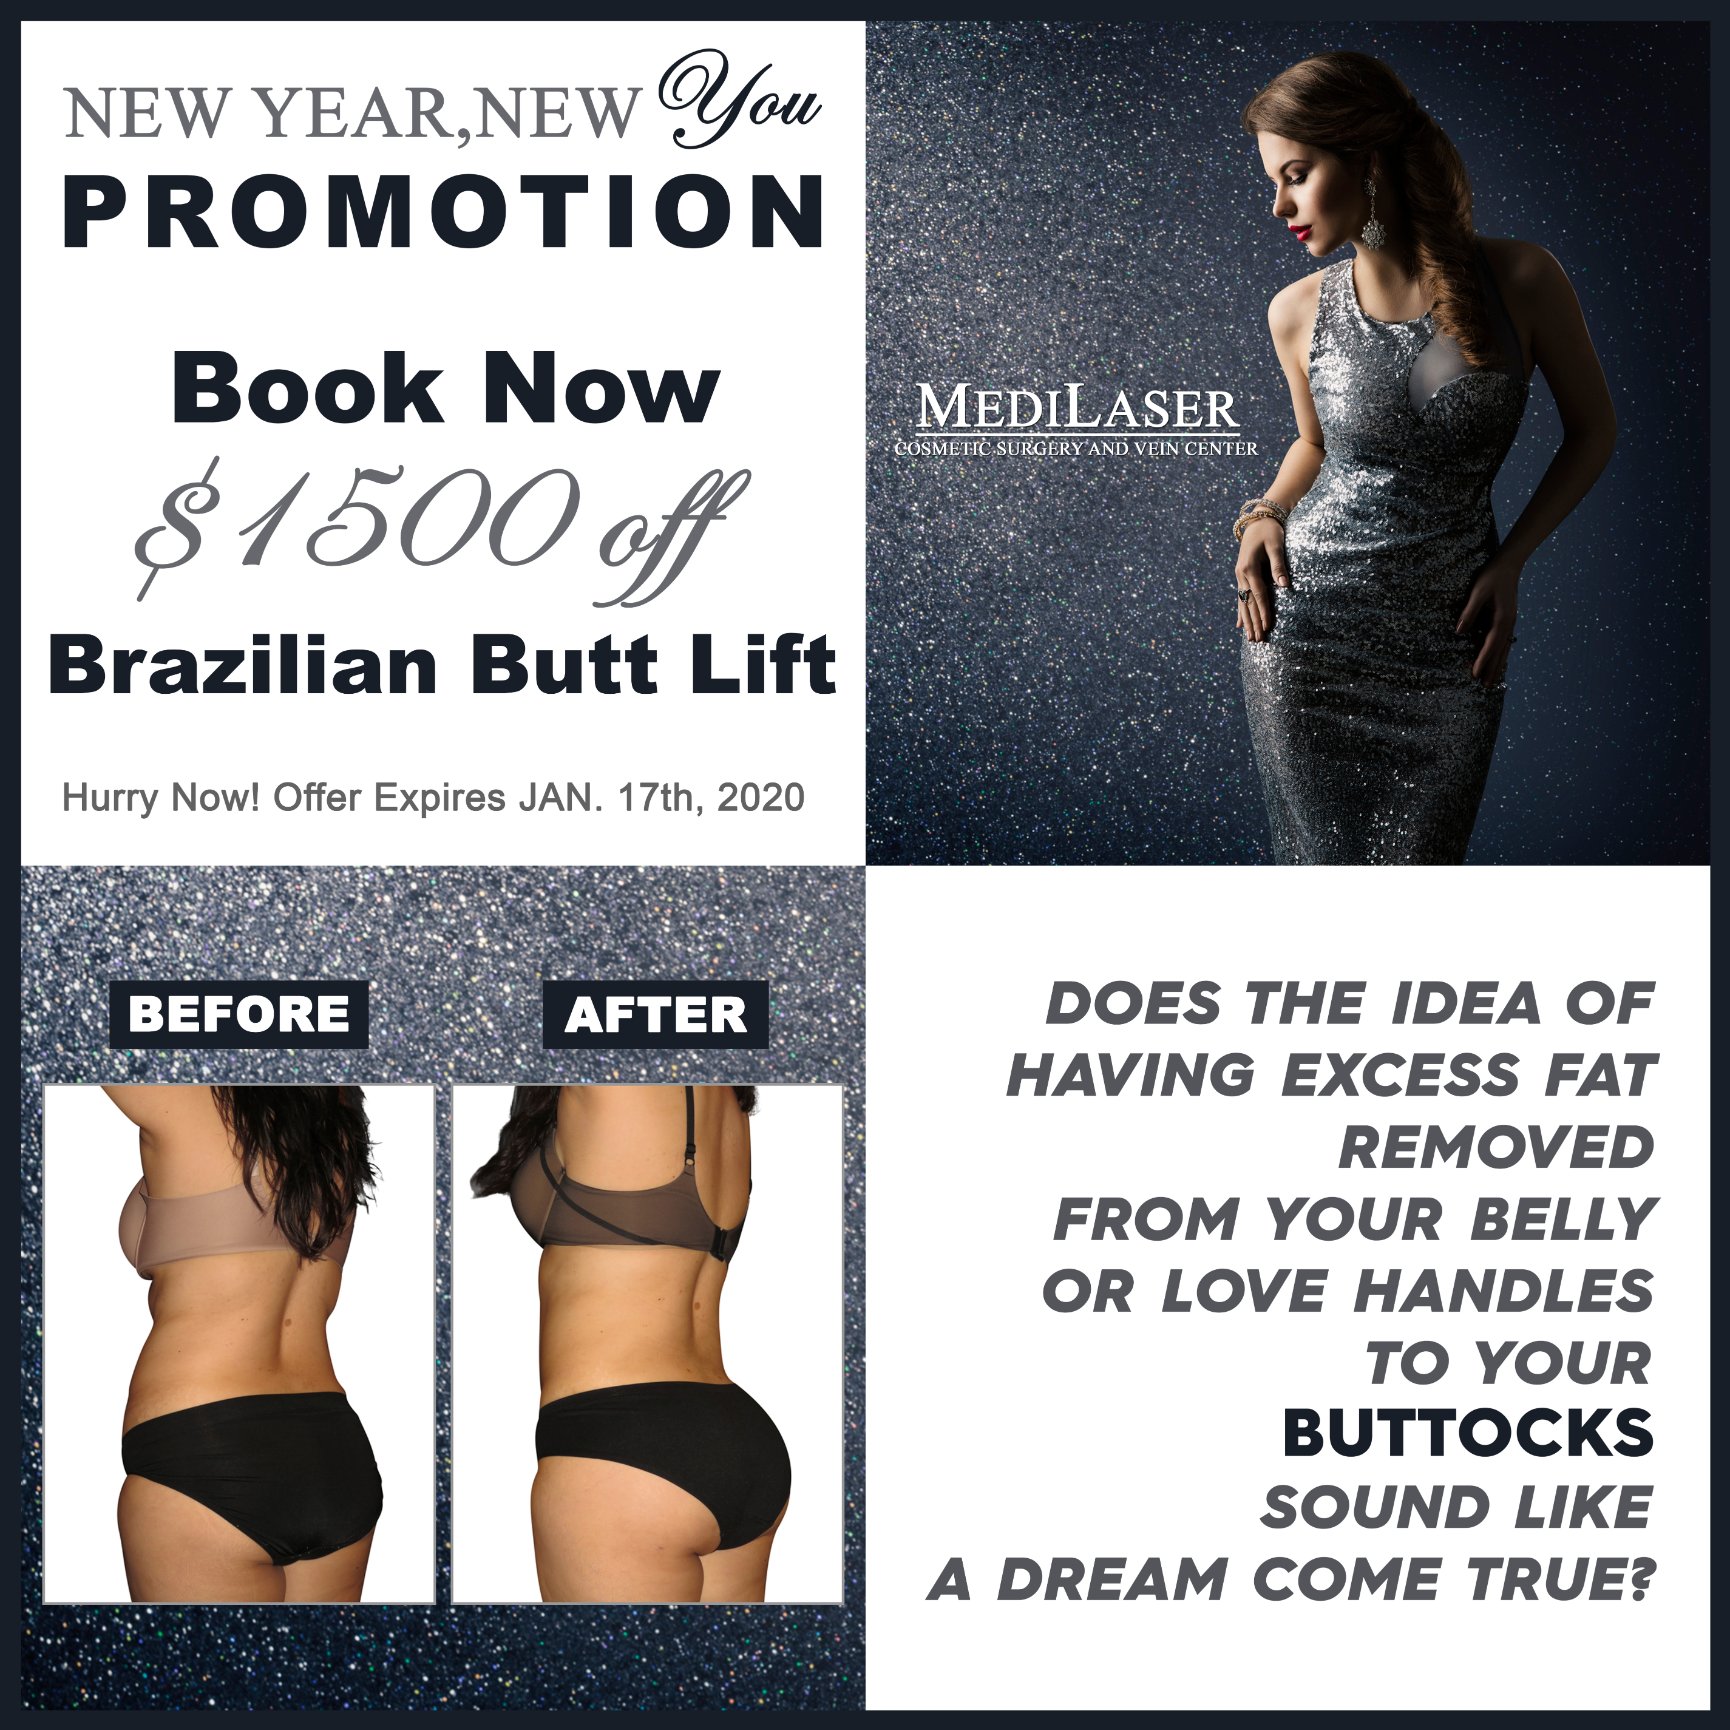 Brazilian Butt Lift BBL Before and After - Medilaser Surgery and Vein Center